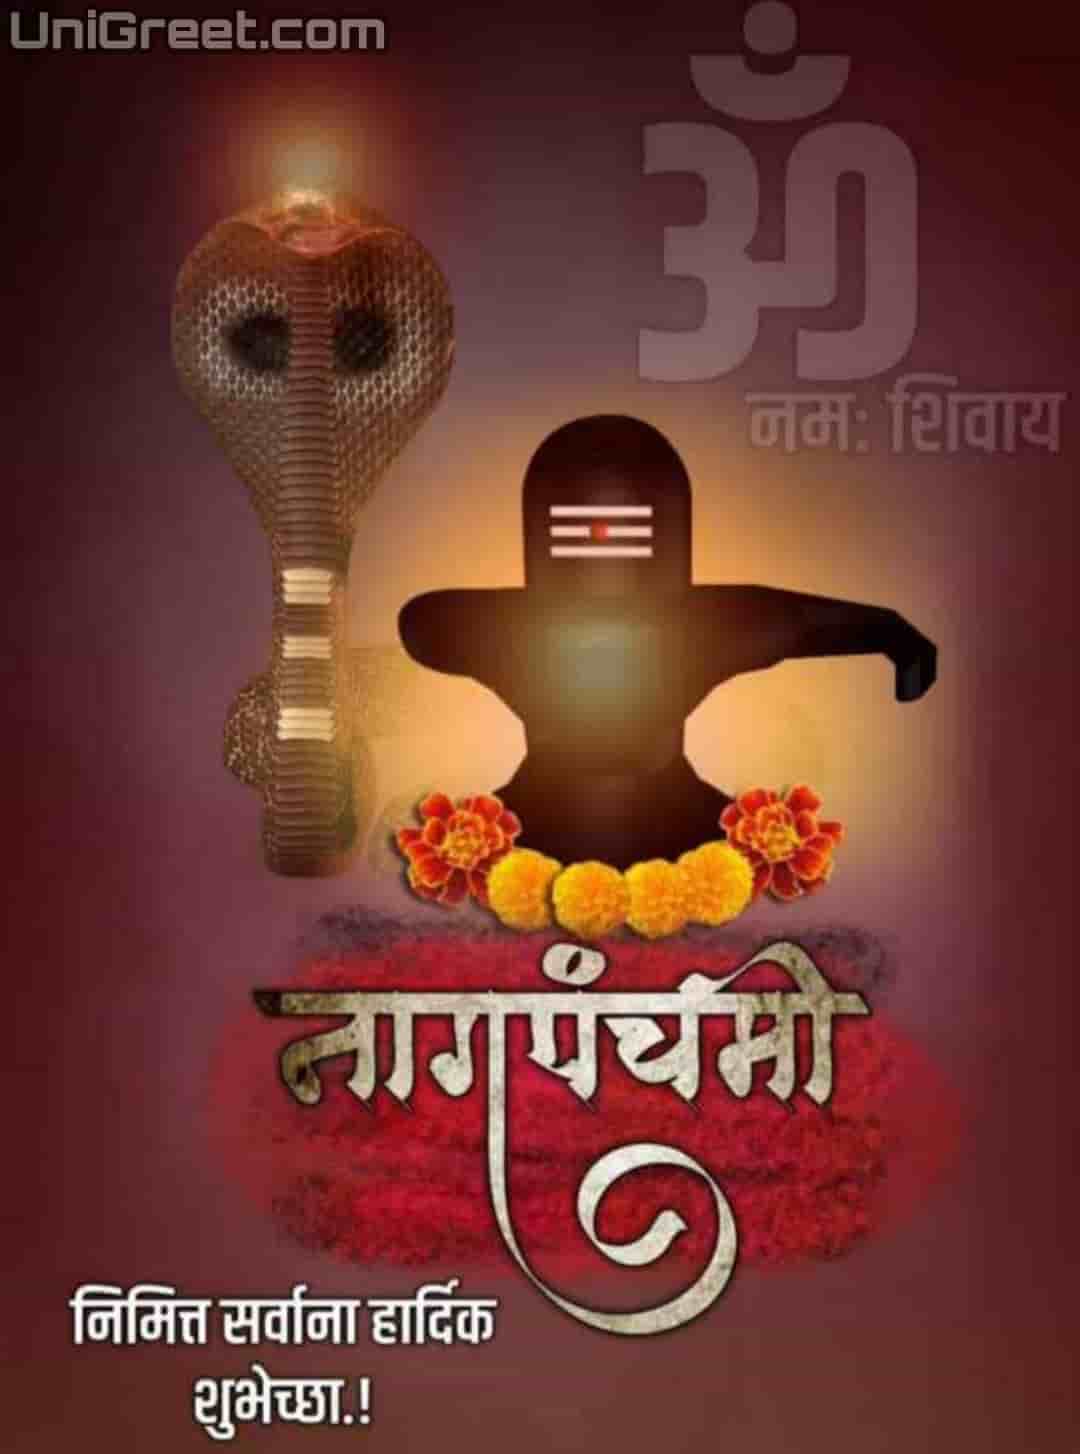 nag-panchami-marathi-banner-background